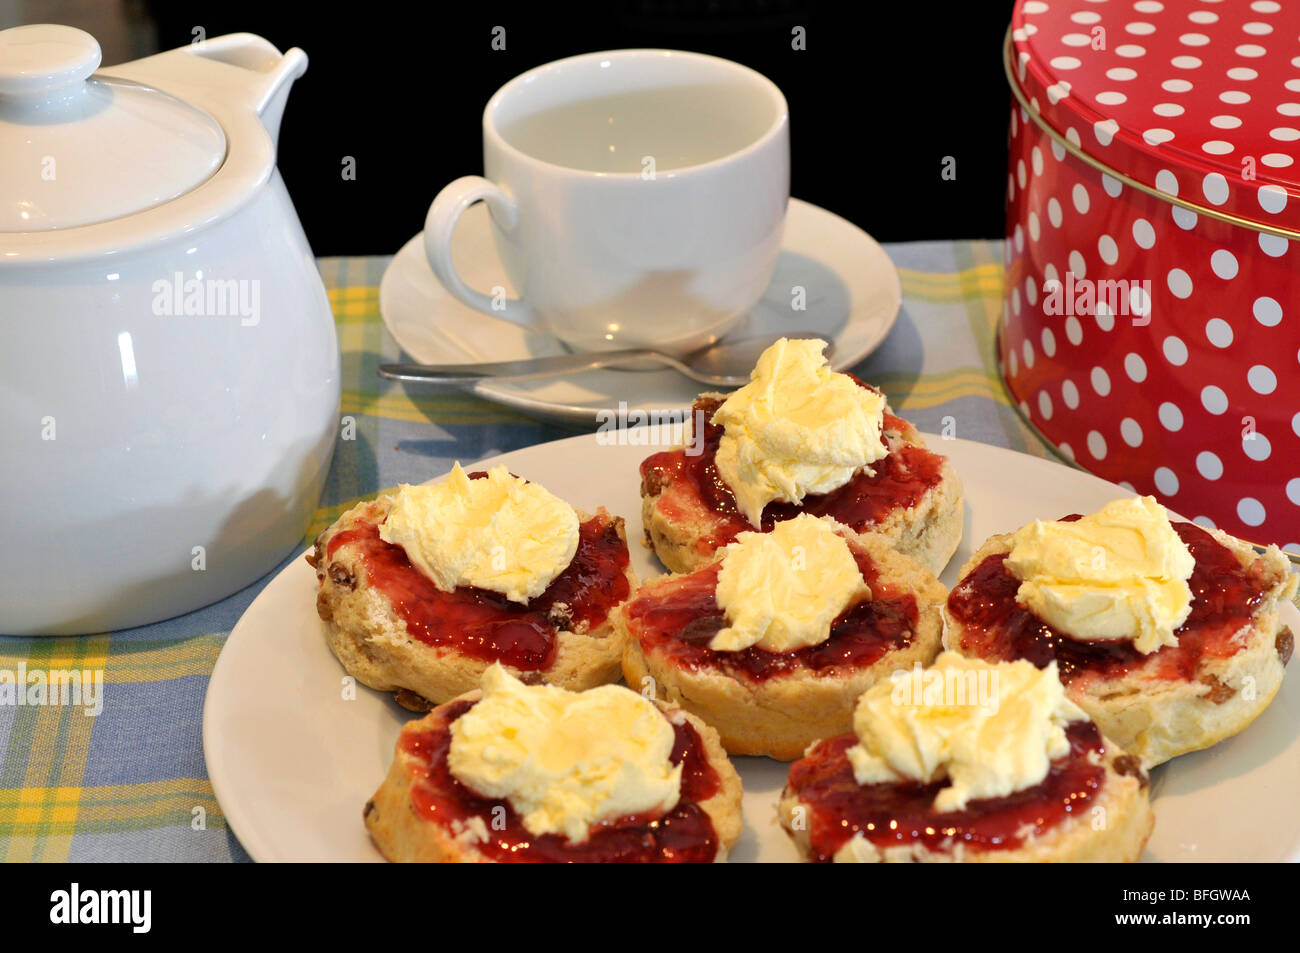 Cream Tea, Traditional Cream Tea, scones with jam and clotted cream and pot of tea Stock Photo